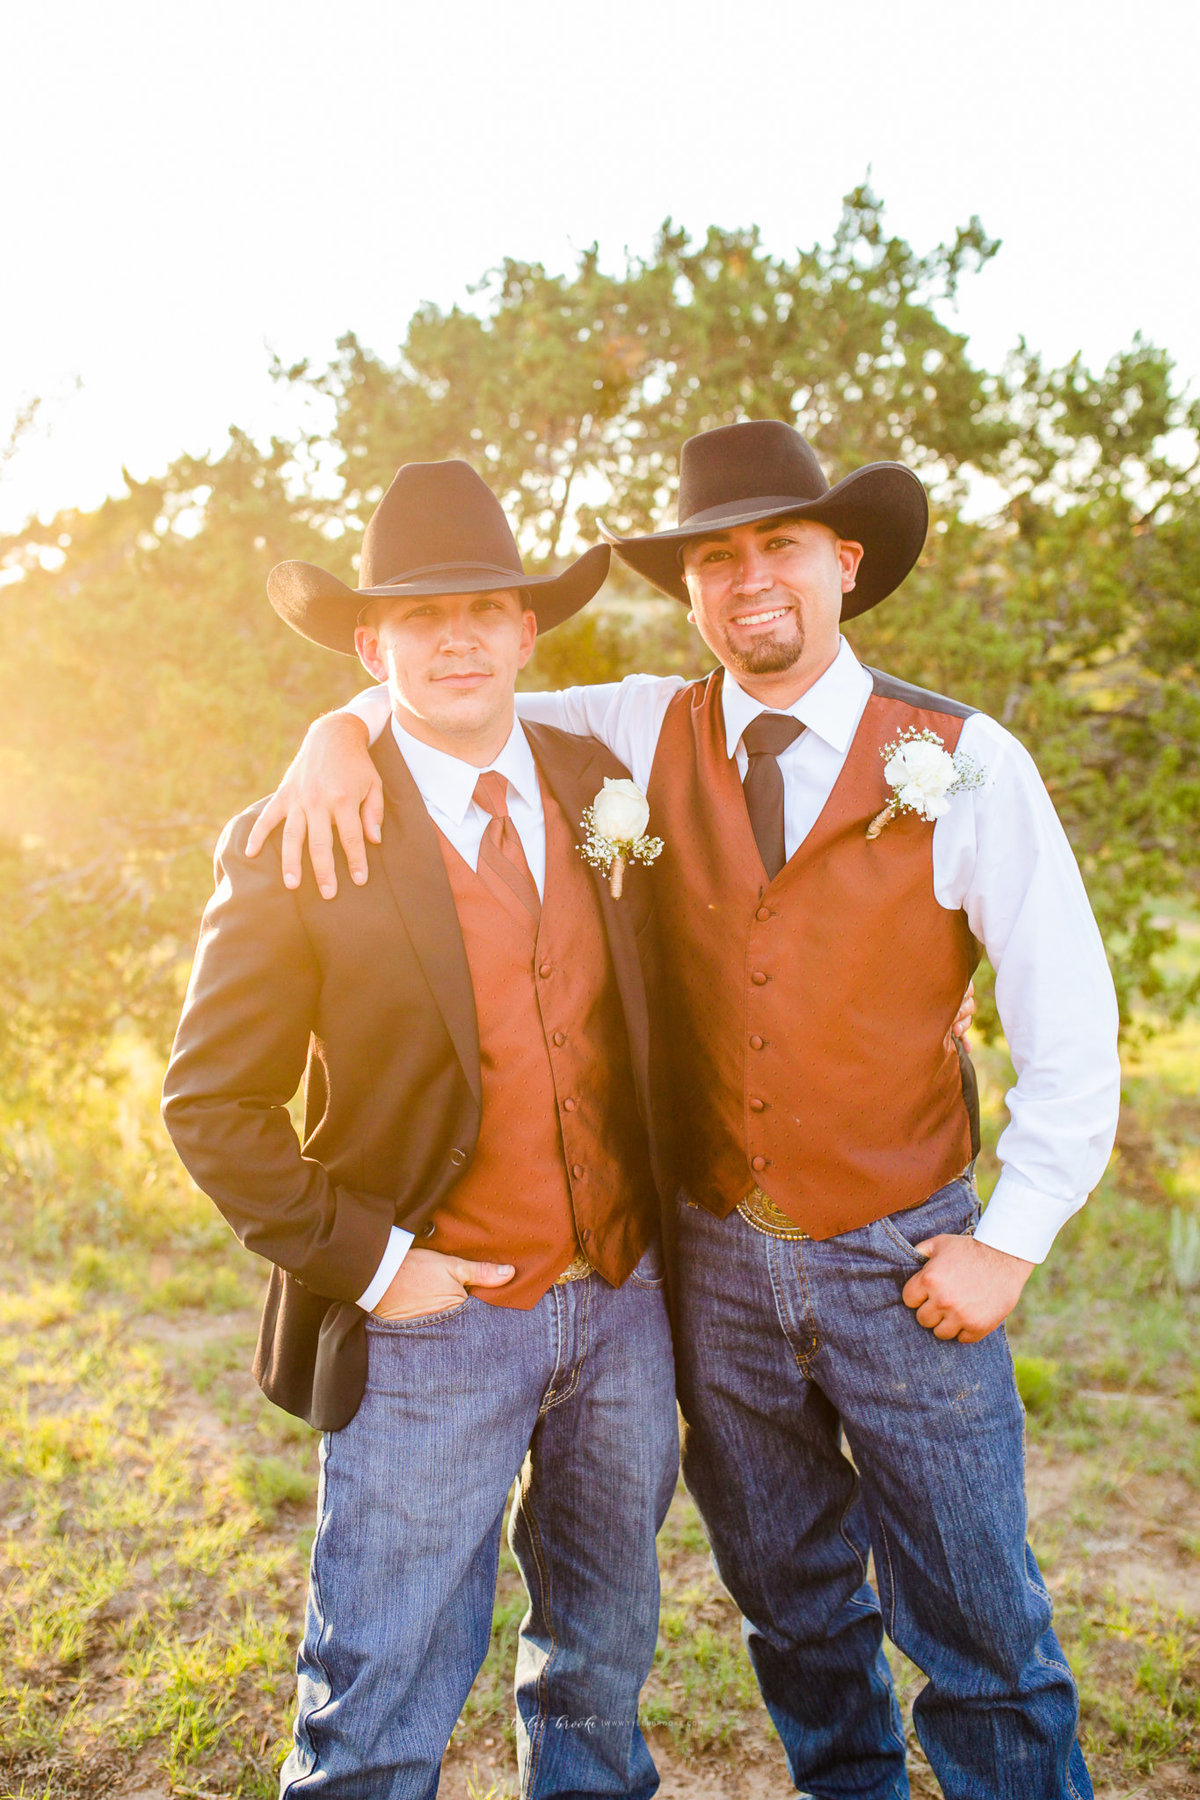 Edgewood-New-Mexico_Country-Wedding-Photographer_www.tylerbrooke.com_Kate-Kauffman-29-of-35-1